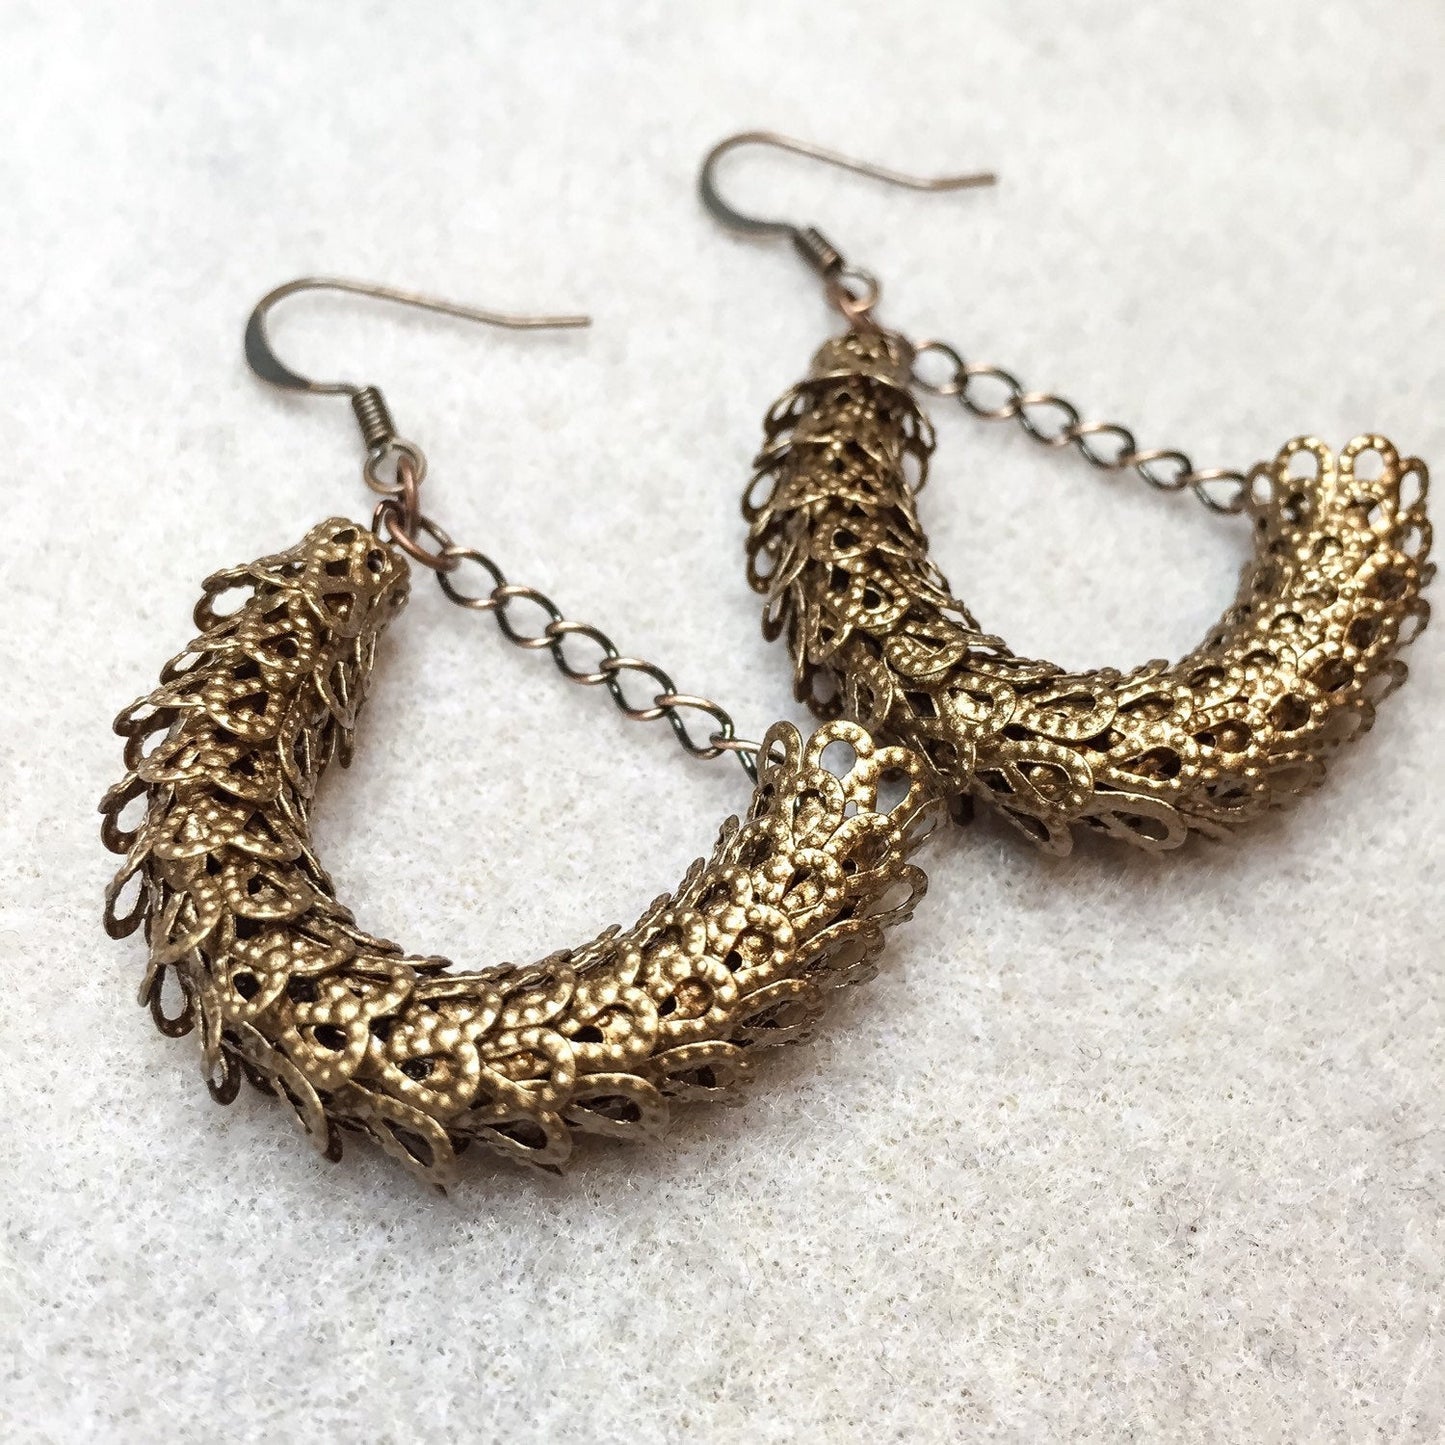 Lacy Dragon Scale Earrings in Antique Copper